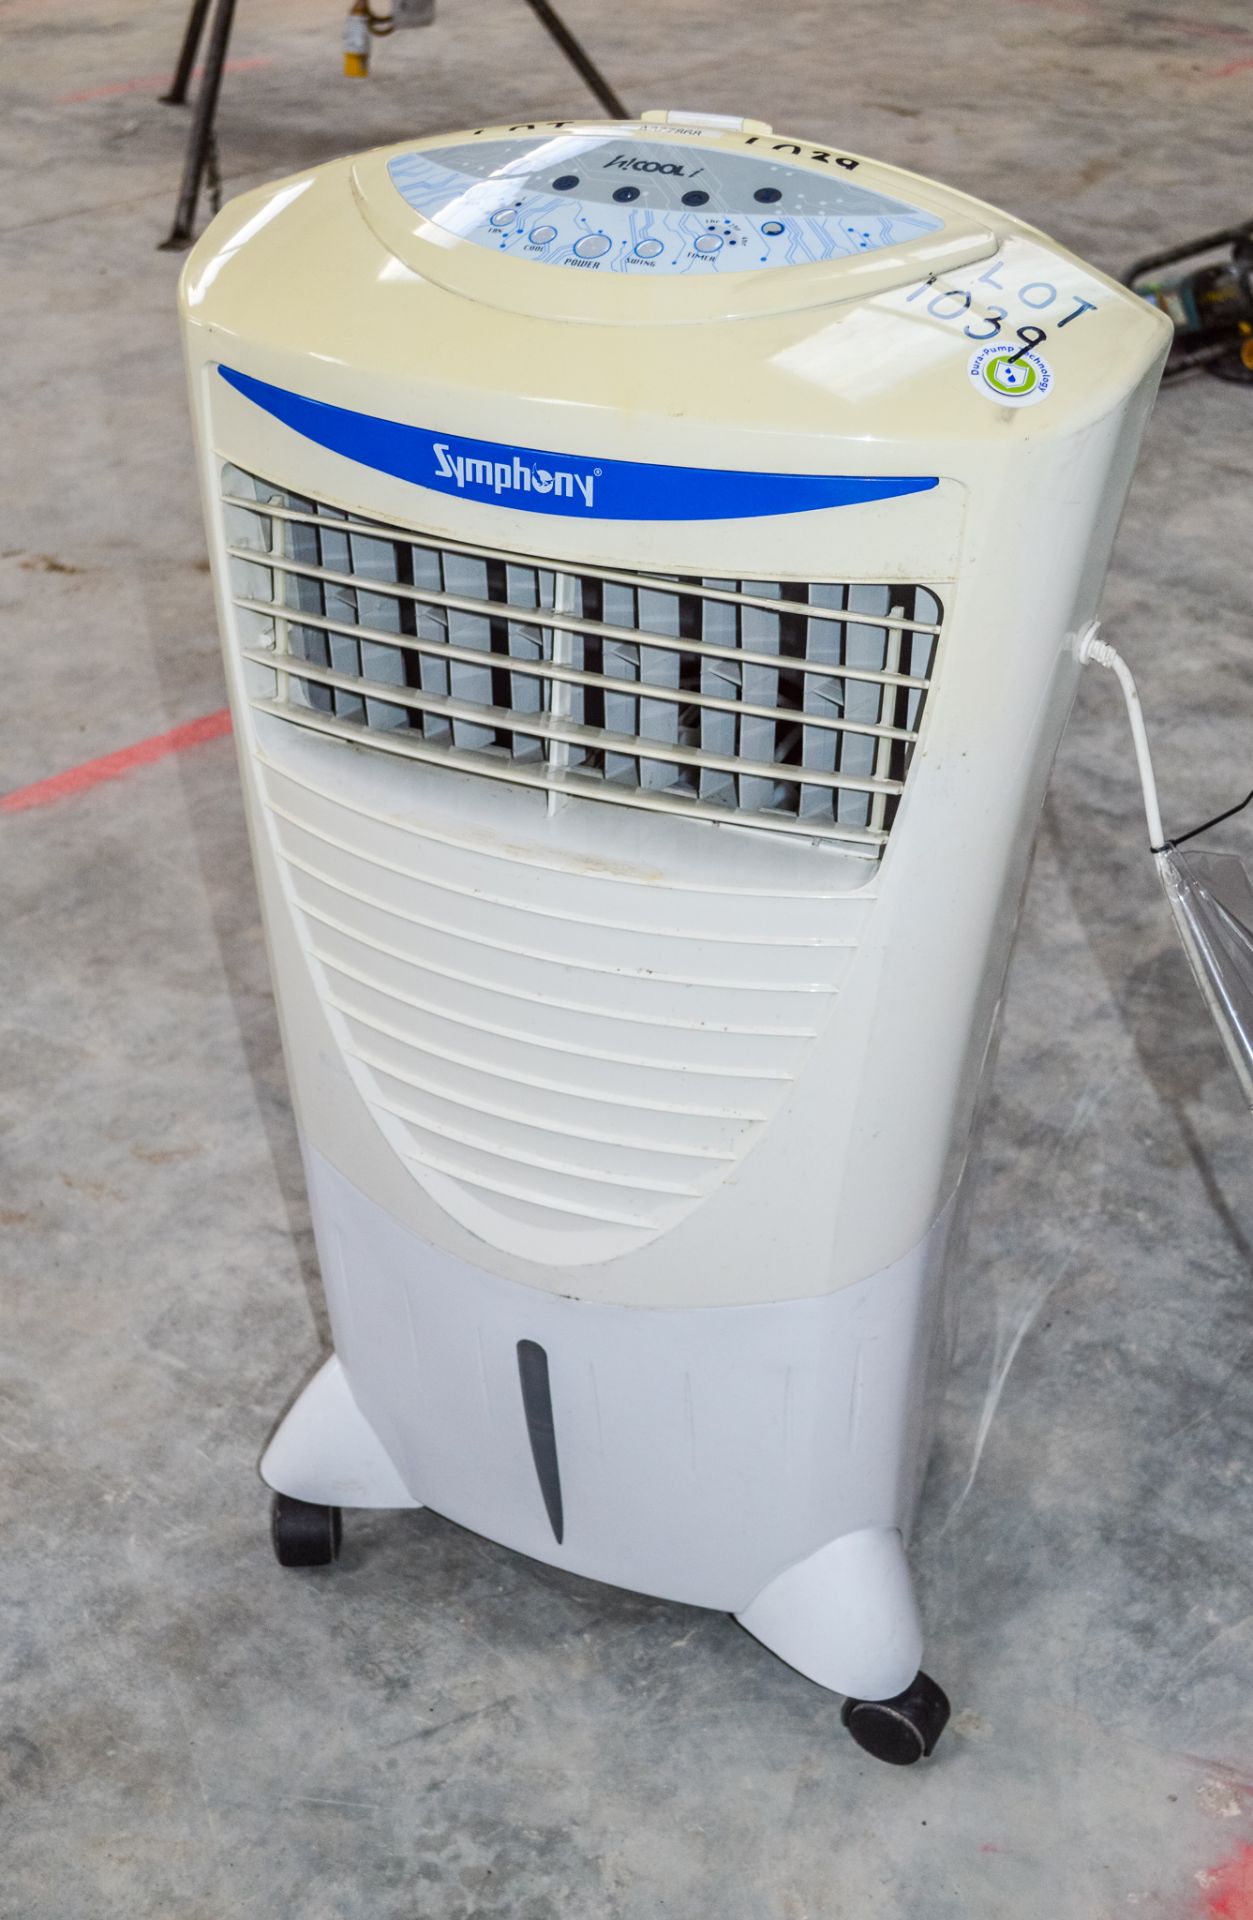 Symphony 240v air conditioning unit A377868